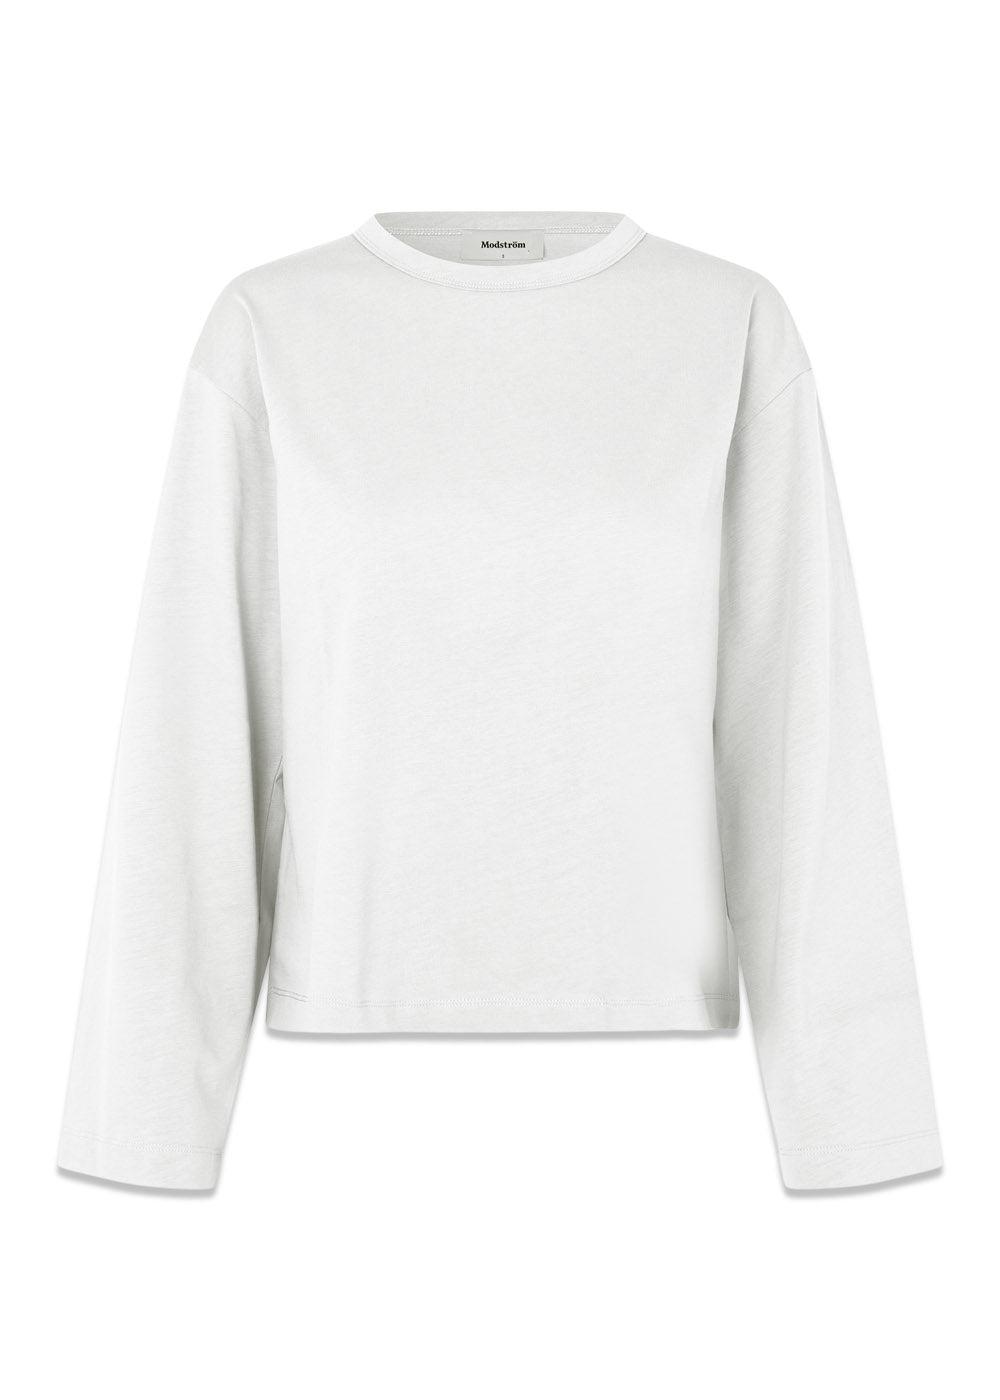 Modströms HellenMD LS t-shirt - Soft White. Køb t-shirts her.